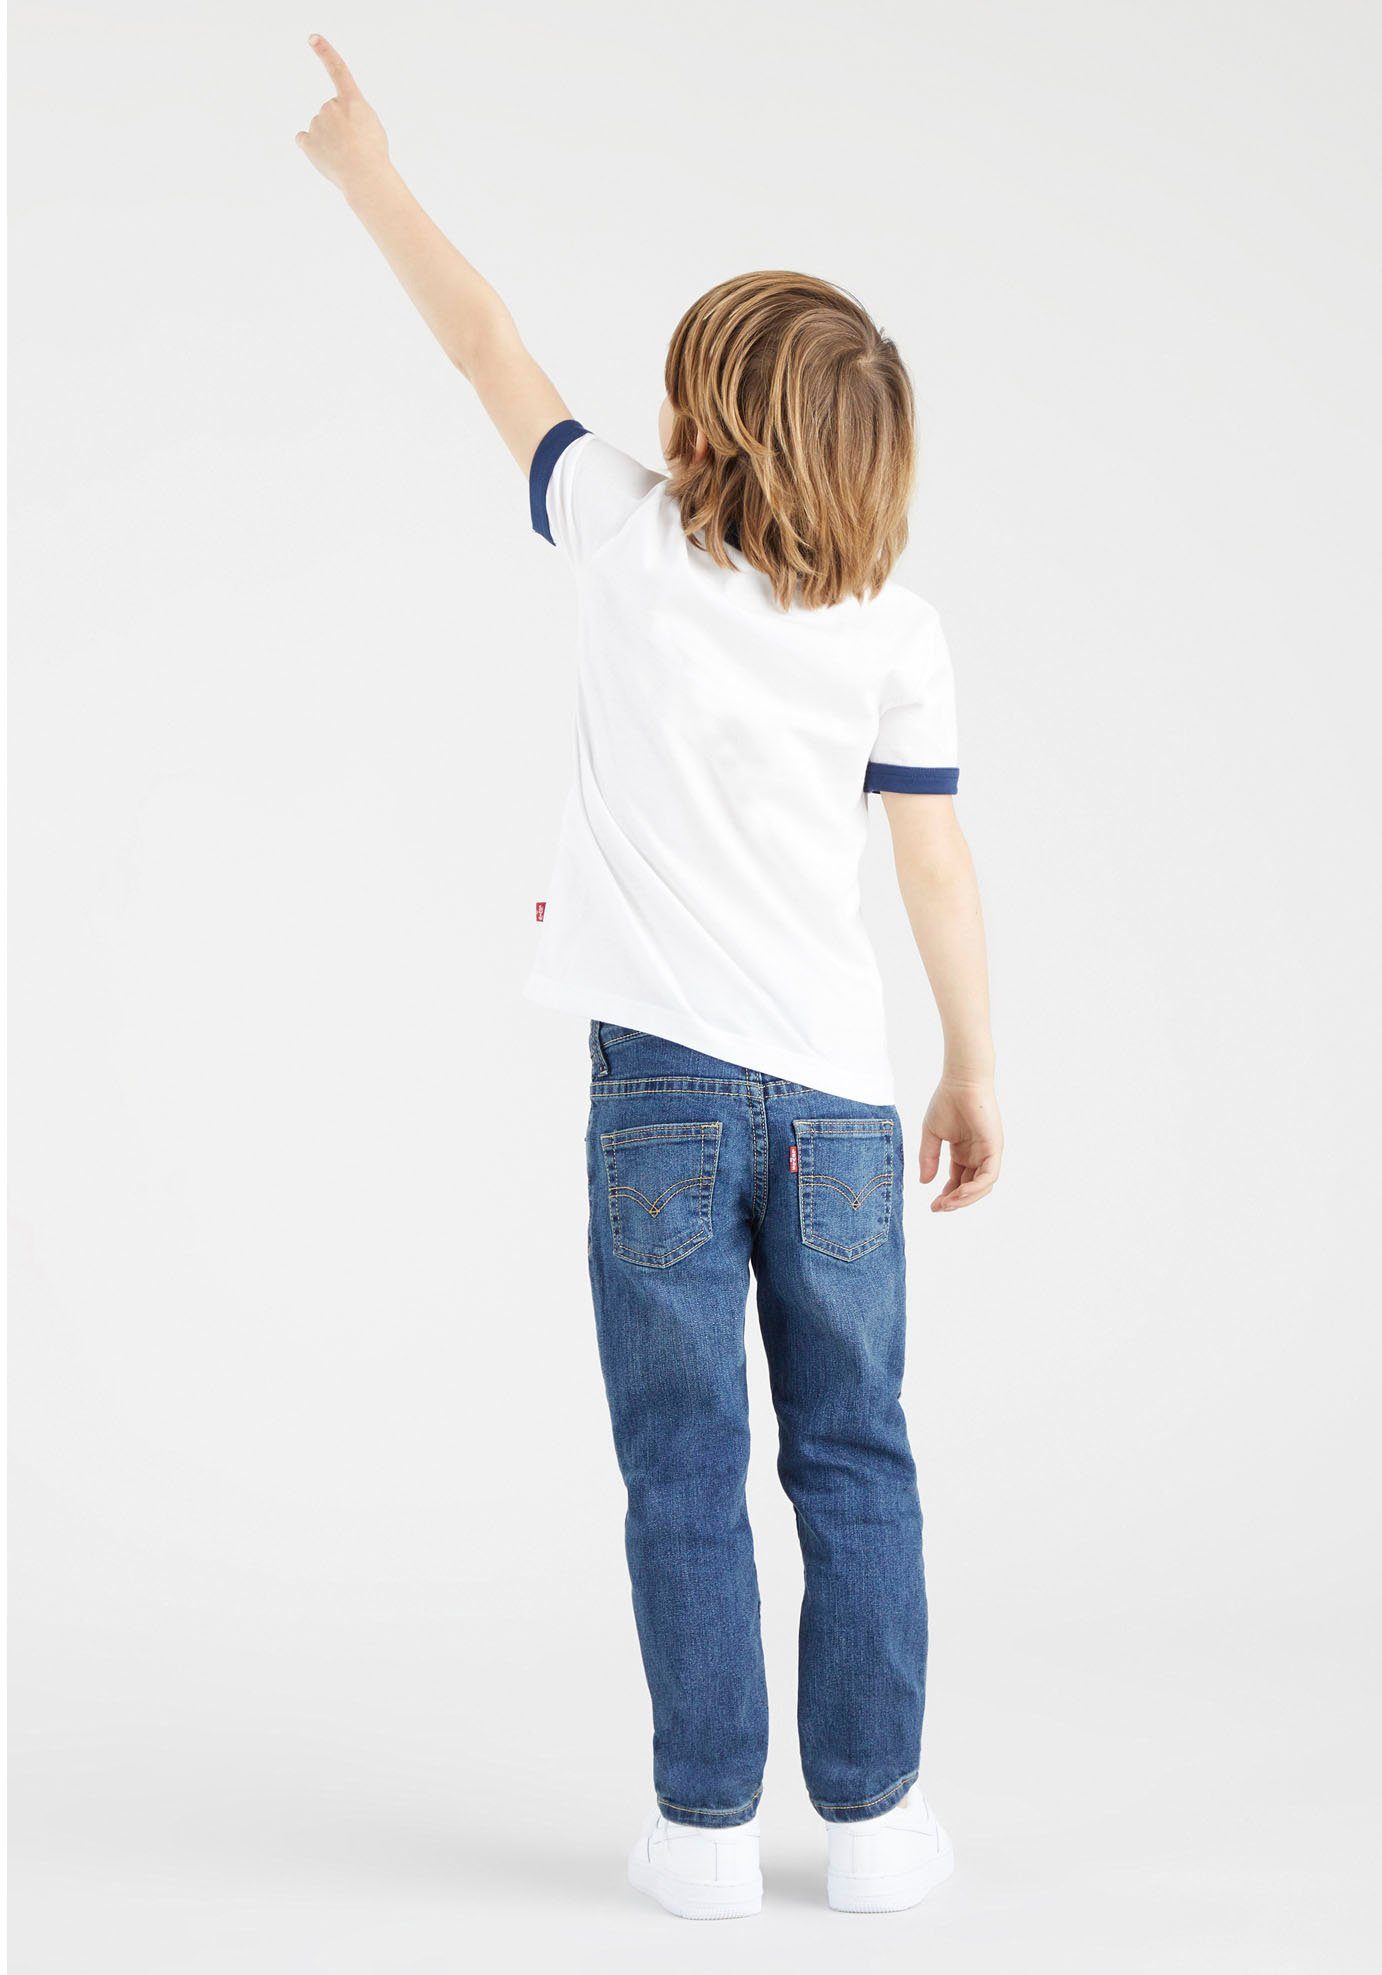 mid BOYS Levi's® Stretch-Jeans 511 for indigo LVB SOFT J PERFORMANCE Kids ECO blue used